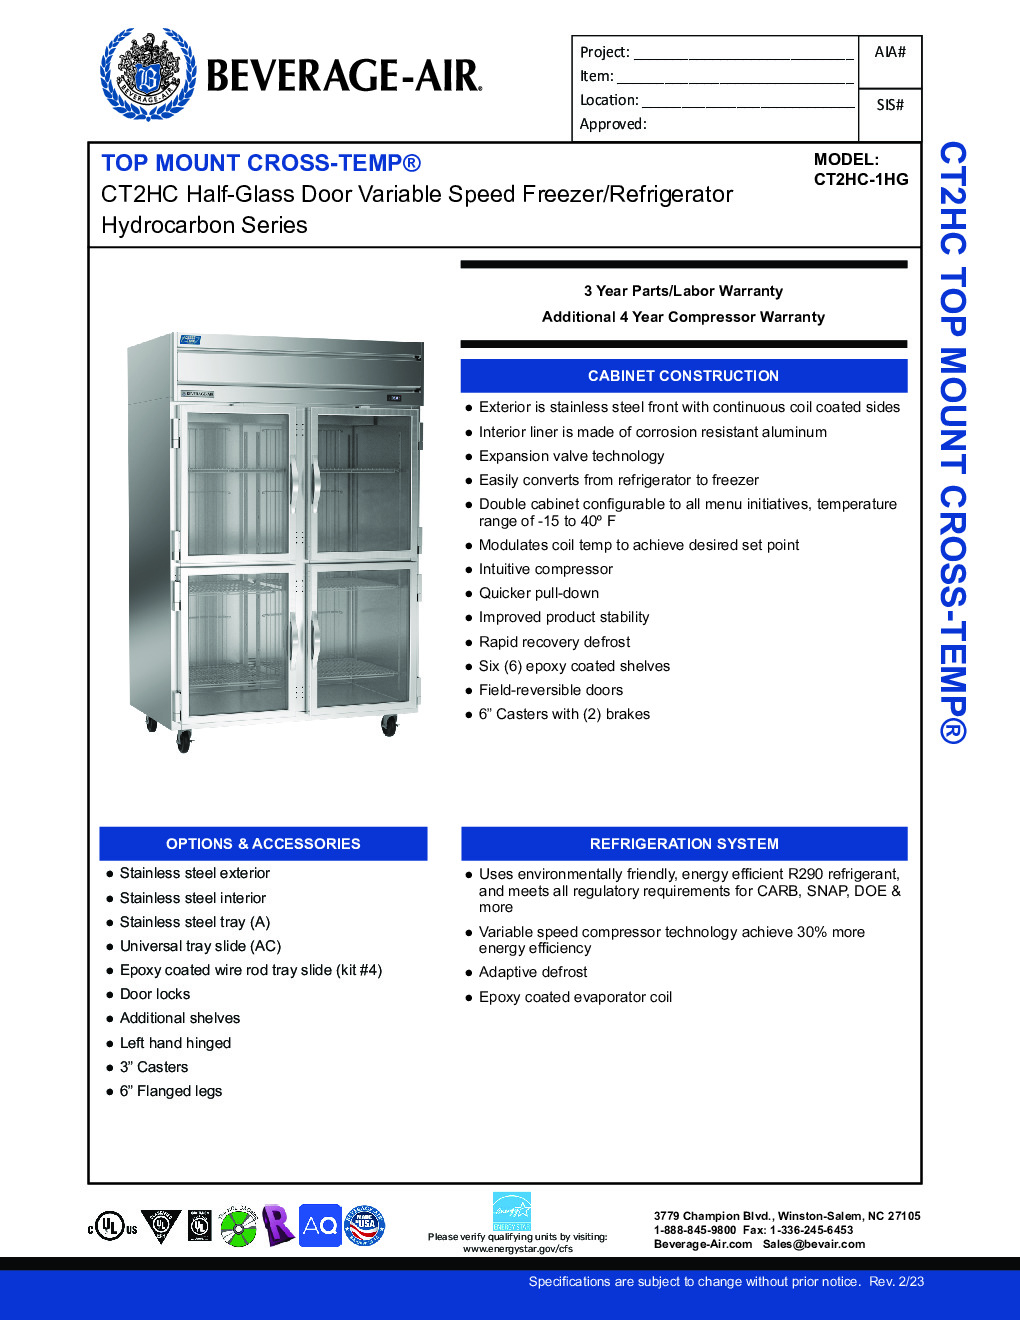 Beverage Air CT2HC-1HG Convertible Refrigerator Freezer w/ 45.2 Cu.Ft., 4 Glass Half Doors